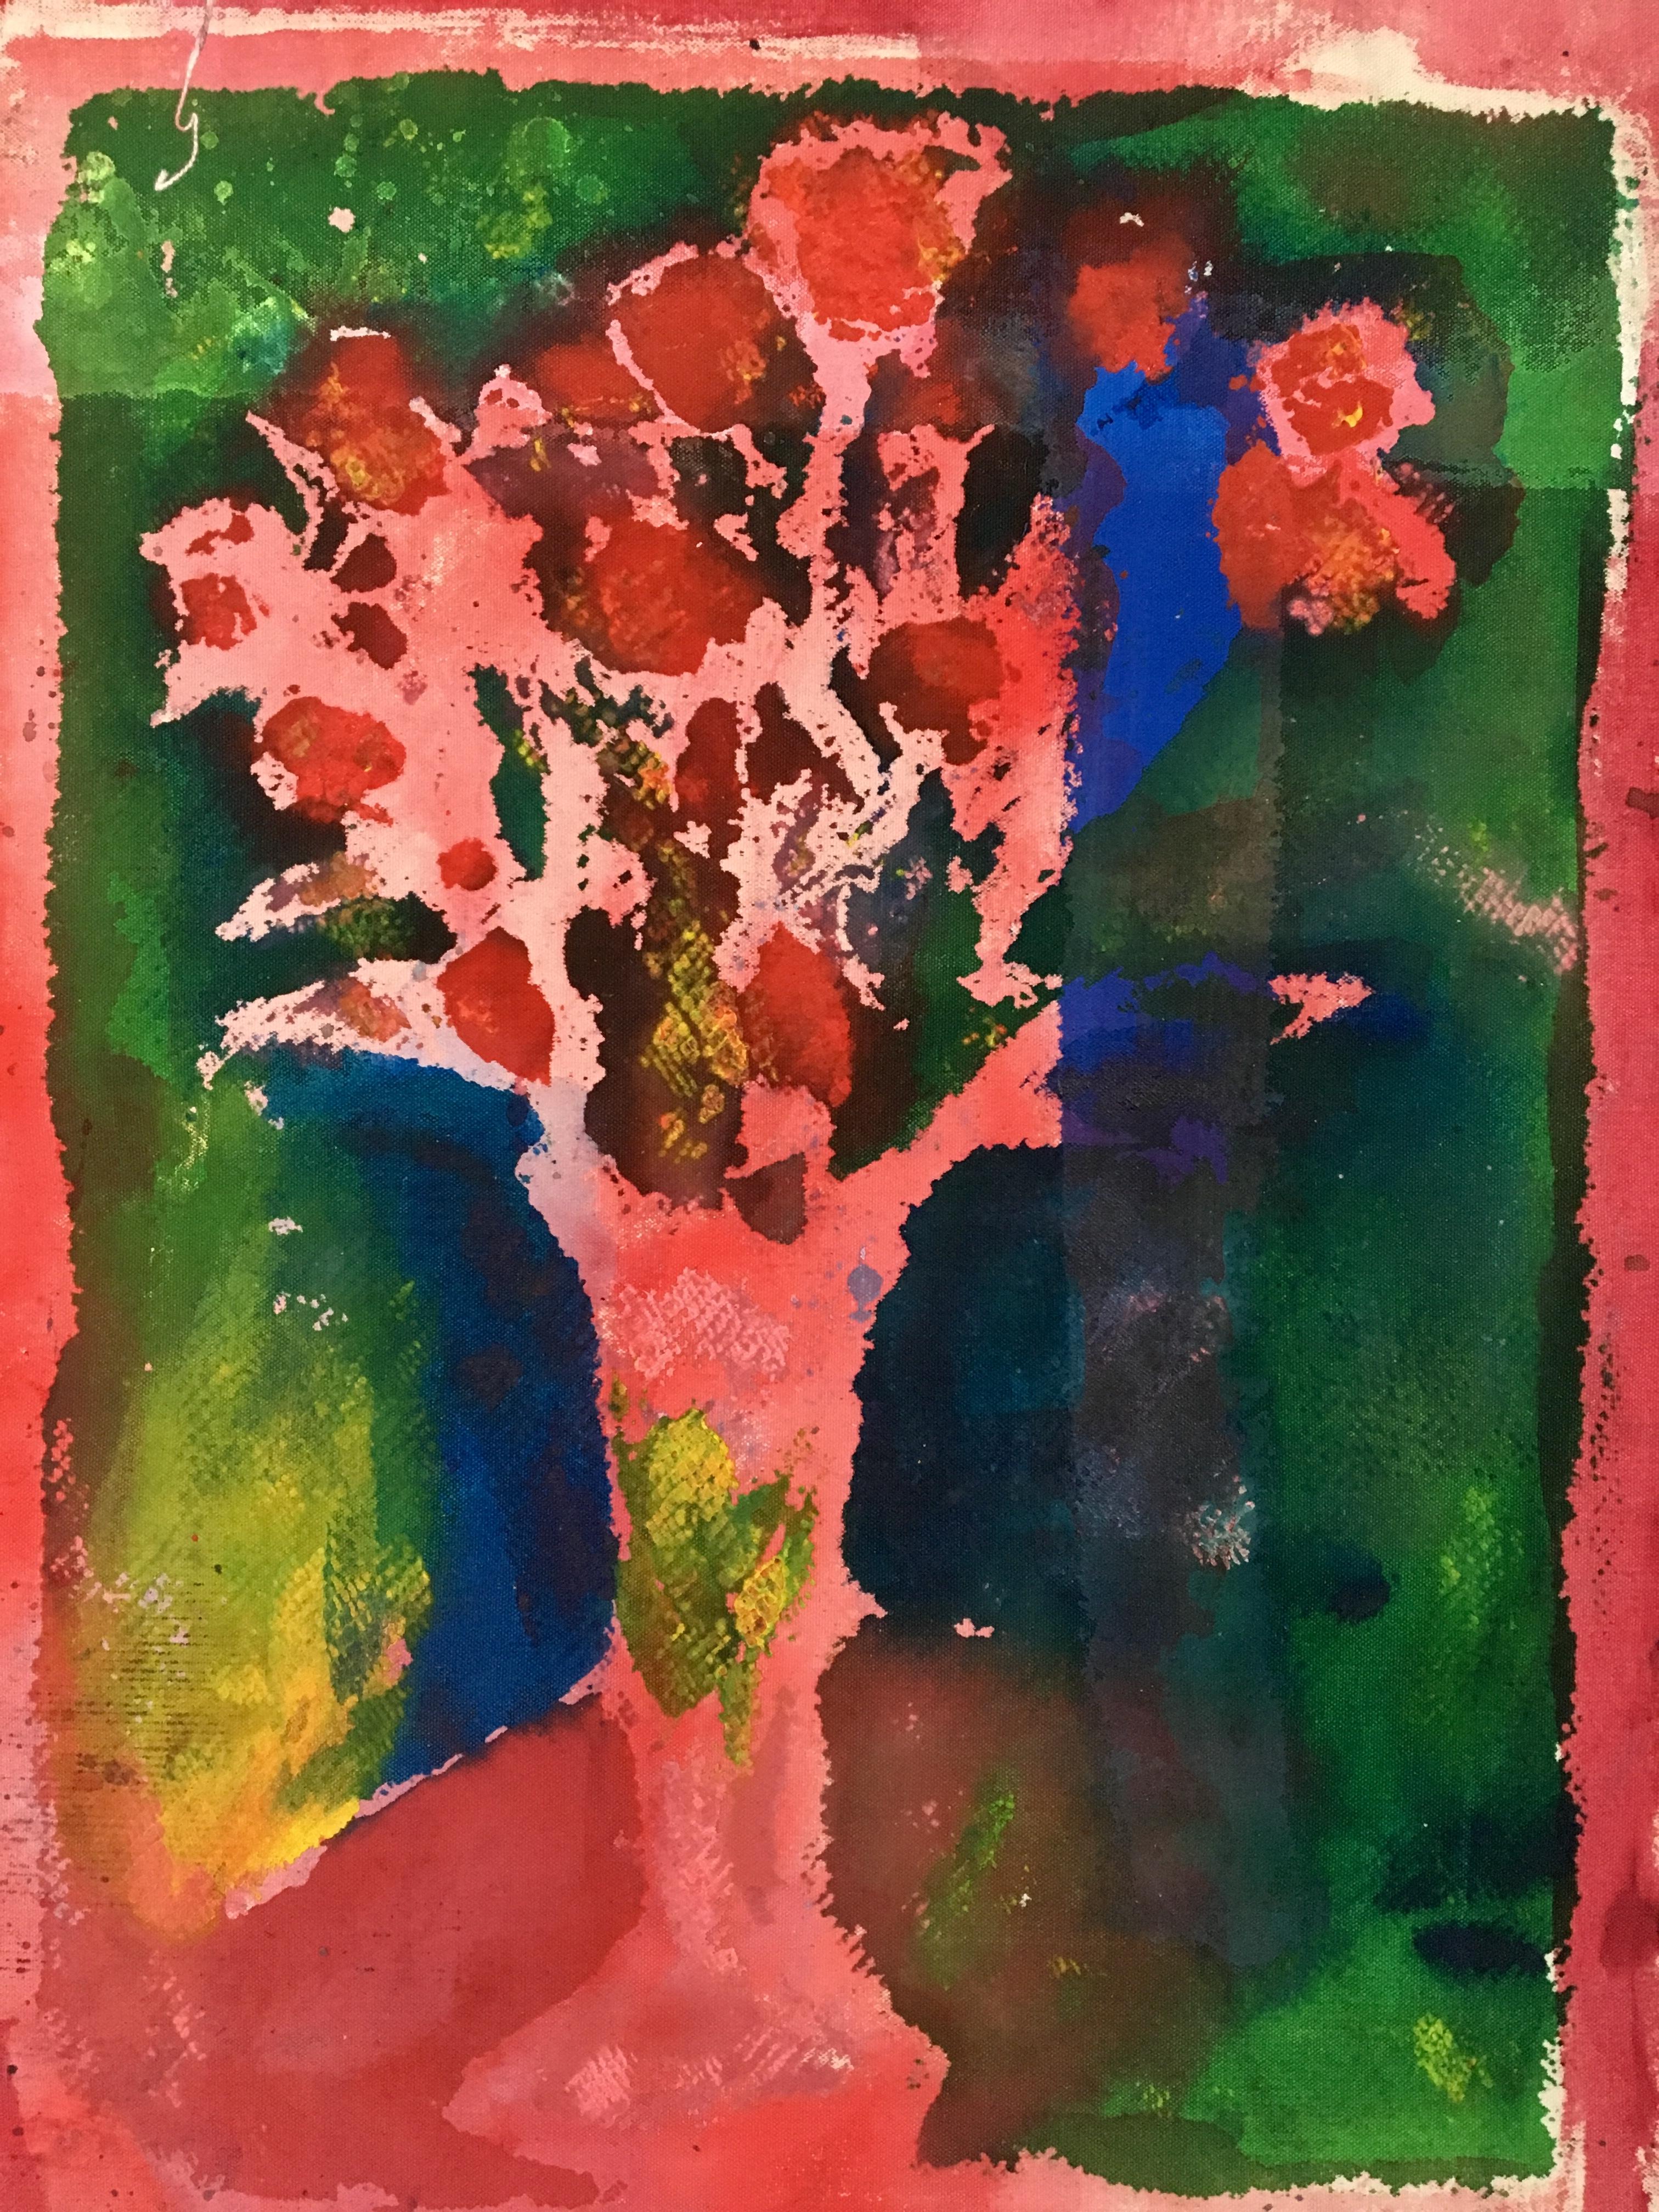 Painting of flowers on canvas: 'Green Backyard' - Mixed Media Art by Joel Handorff